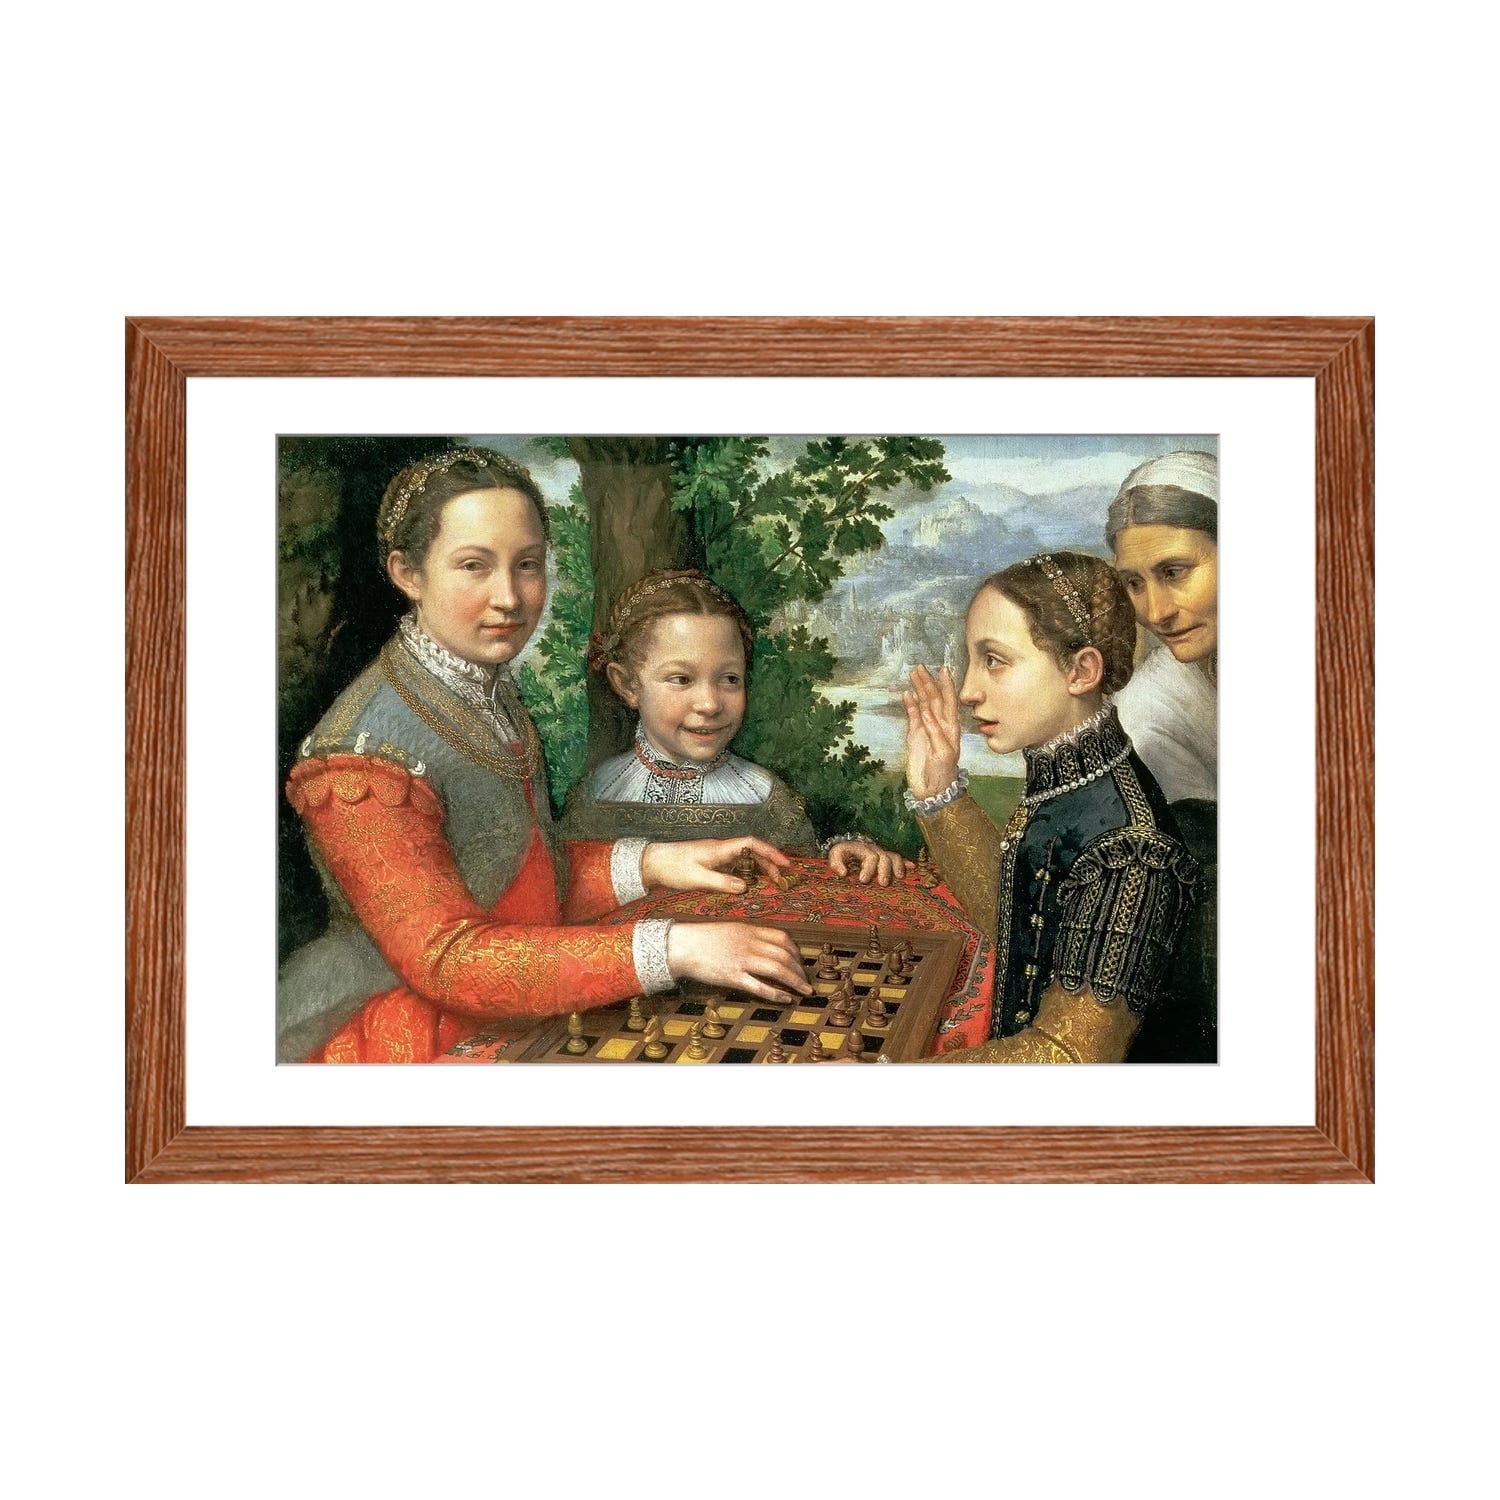 Art & Paintings: Sofonisba Anguissola - The Chess Game